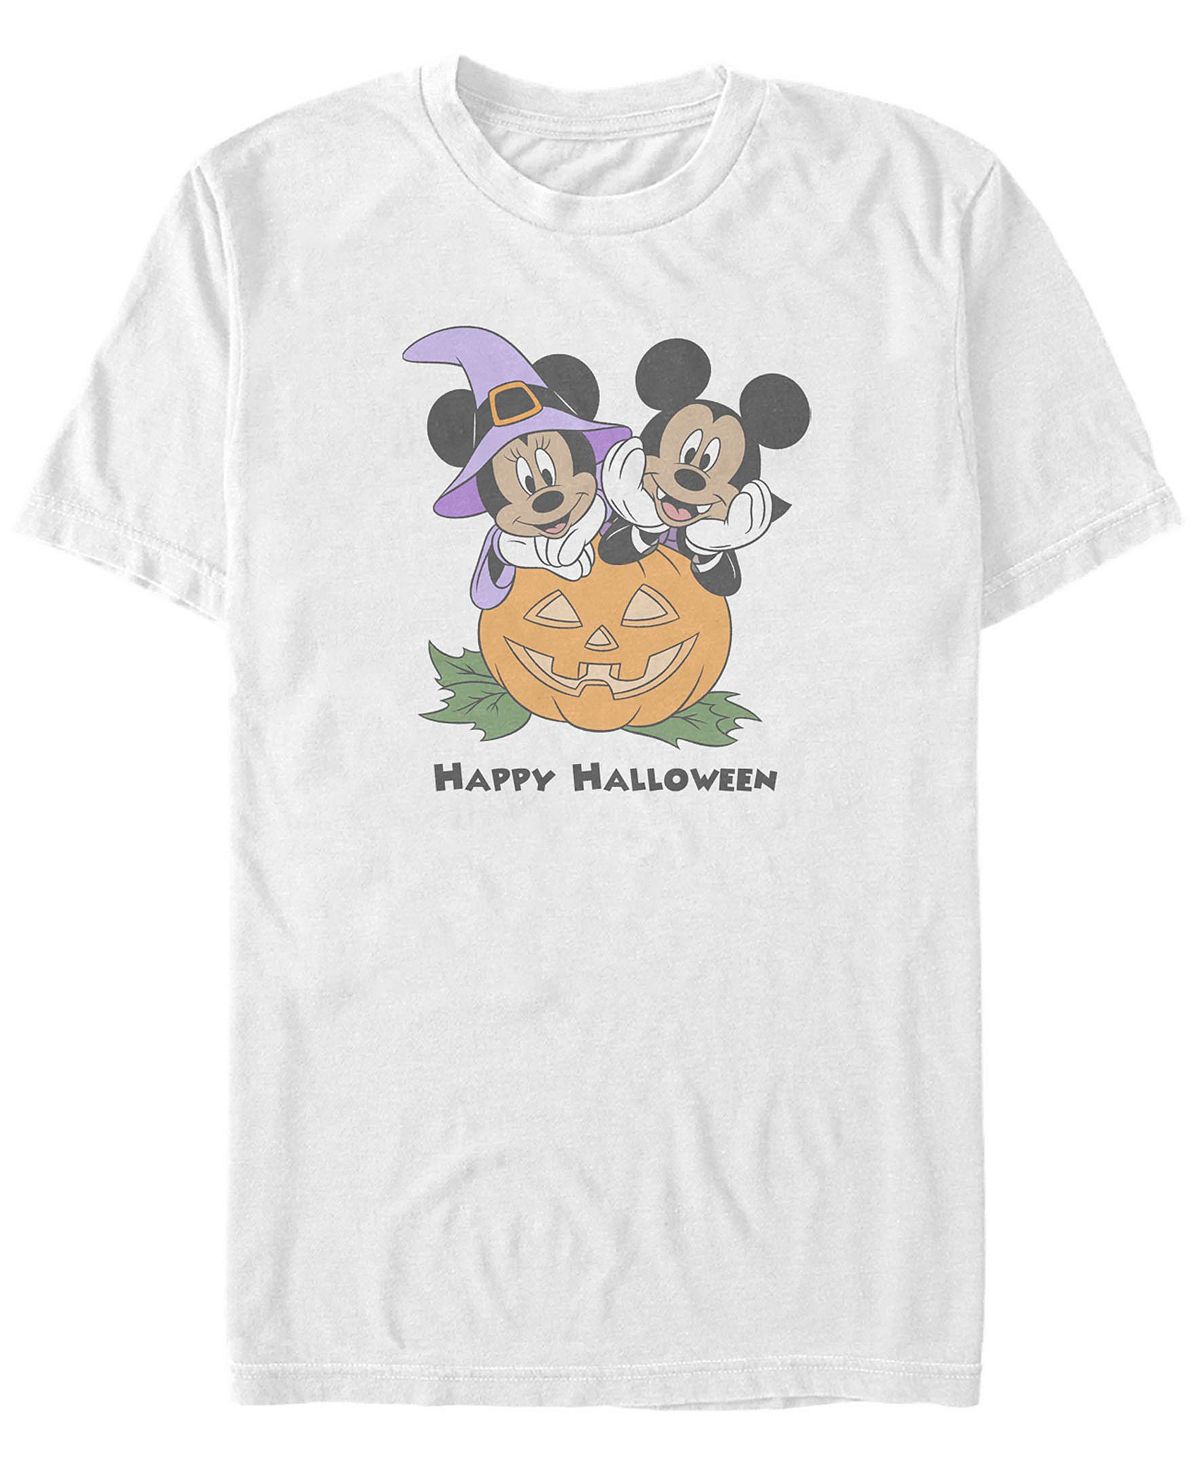 Мужская футболка с короткими рукавами mickey classic pumpkin mice Fifth Sun, белый мужская футболка mickey classic pluto holiday colors с короткими рукавами fifth sun черный